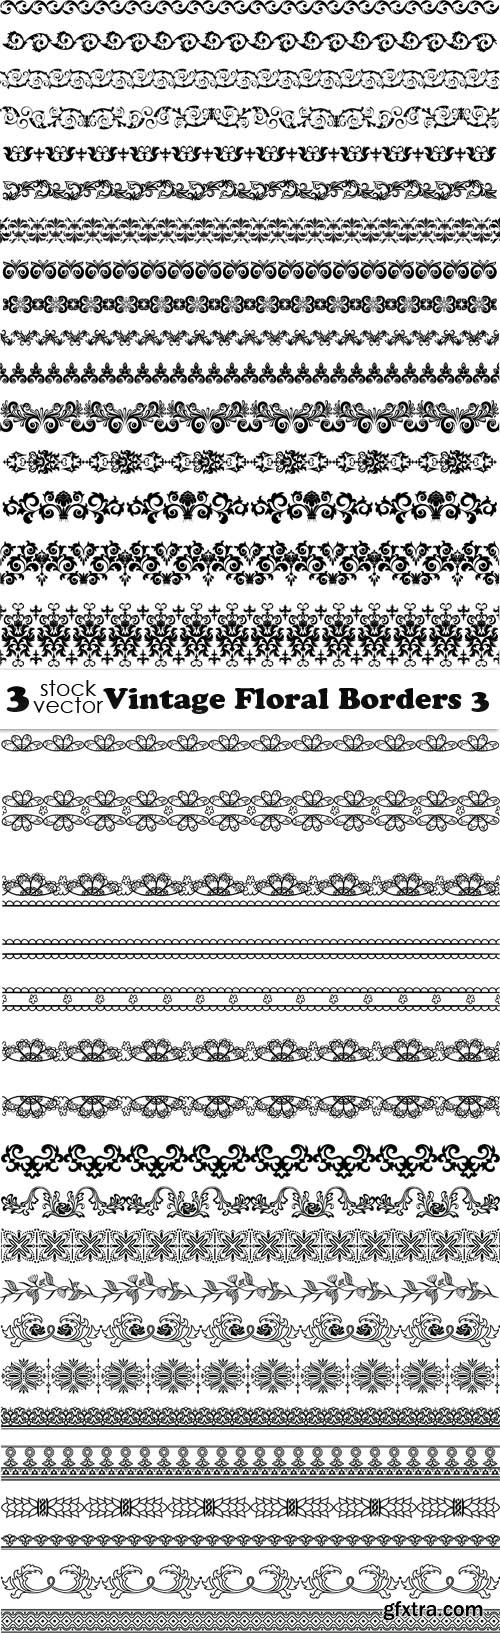 Vectors - Vintage Floral Borders 3